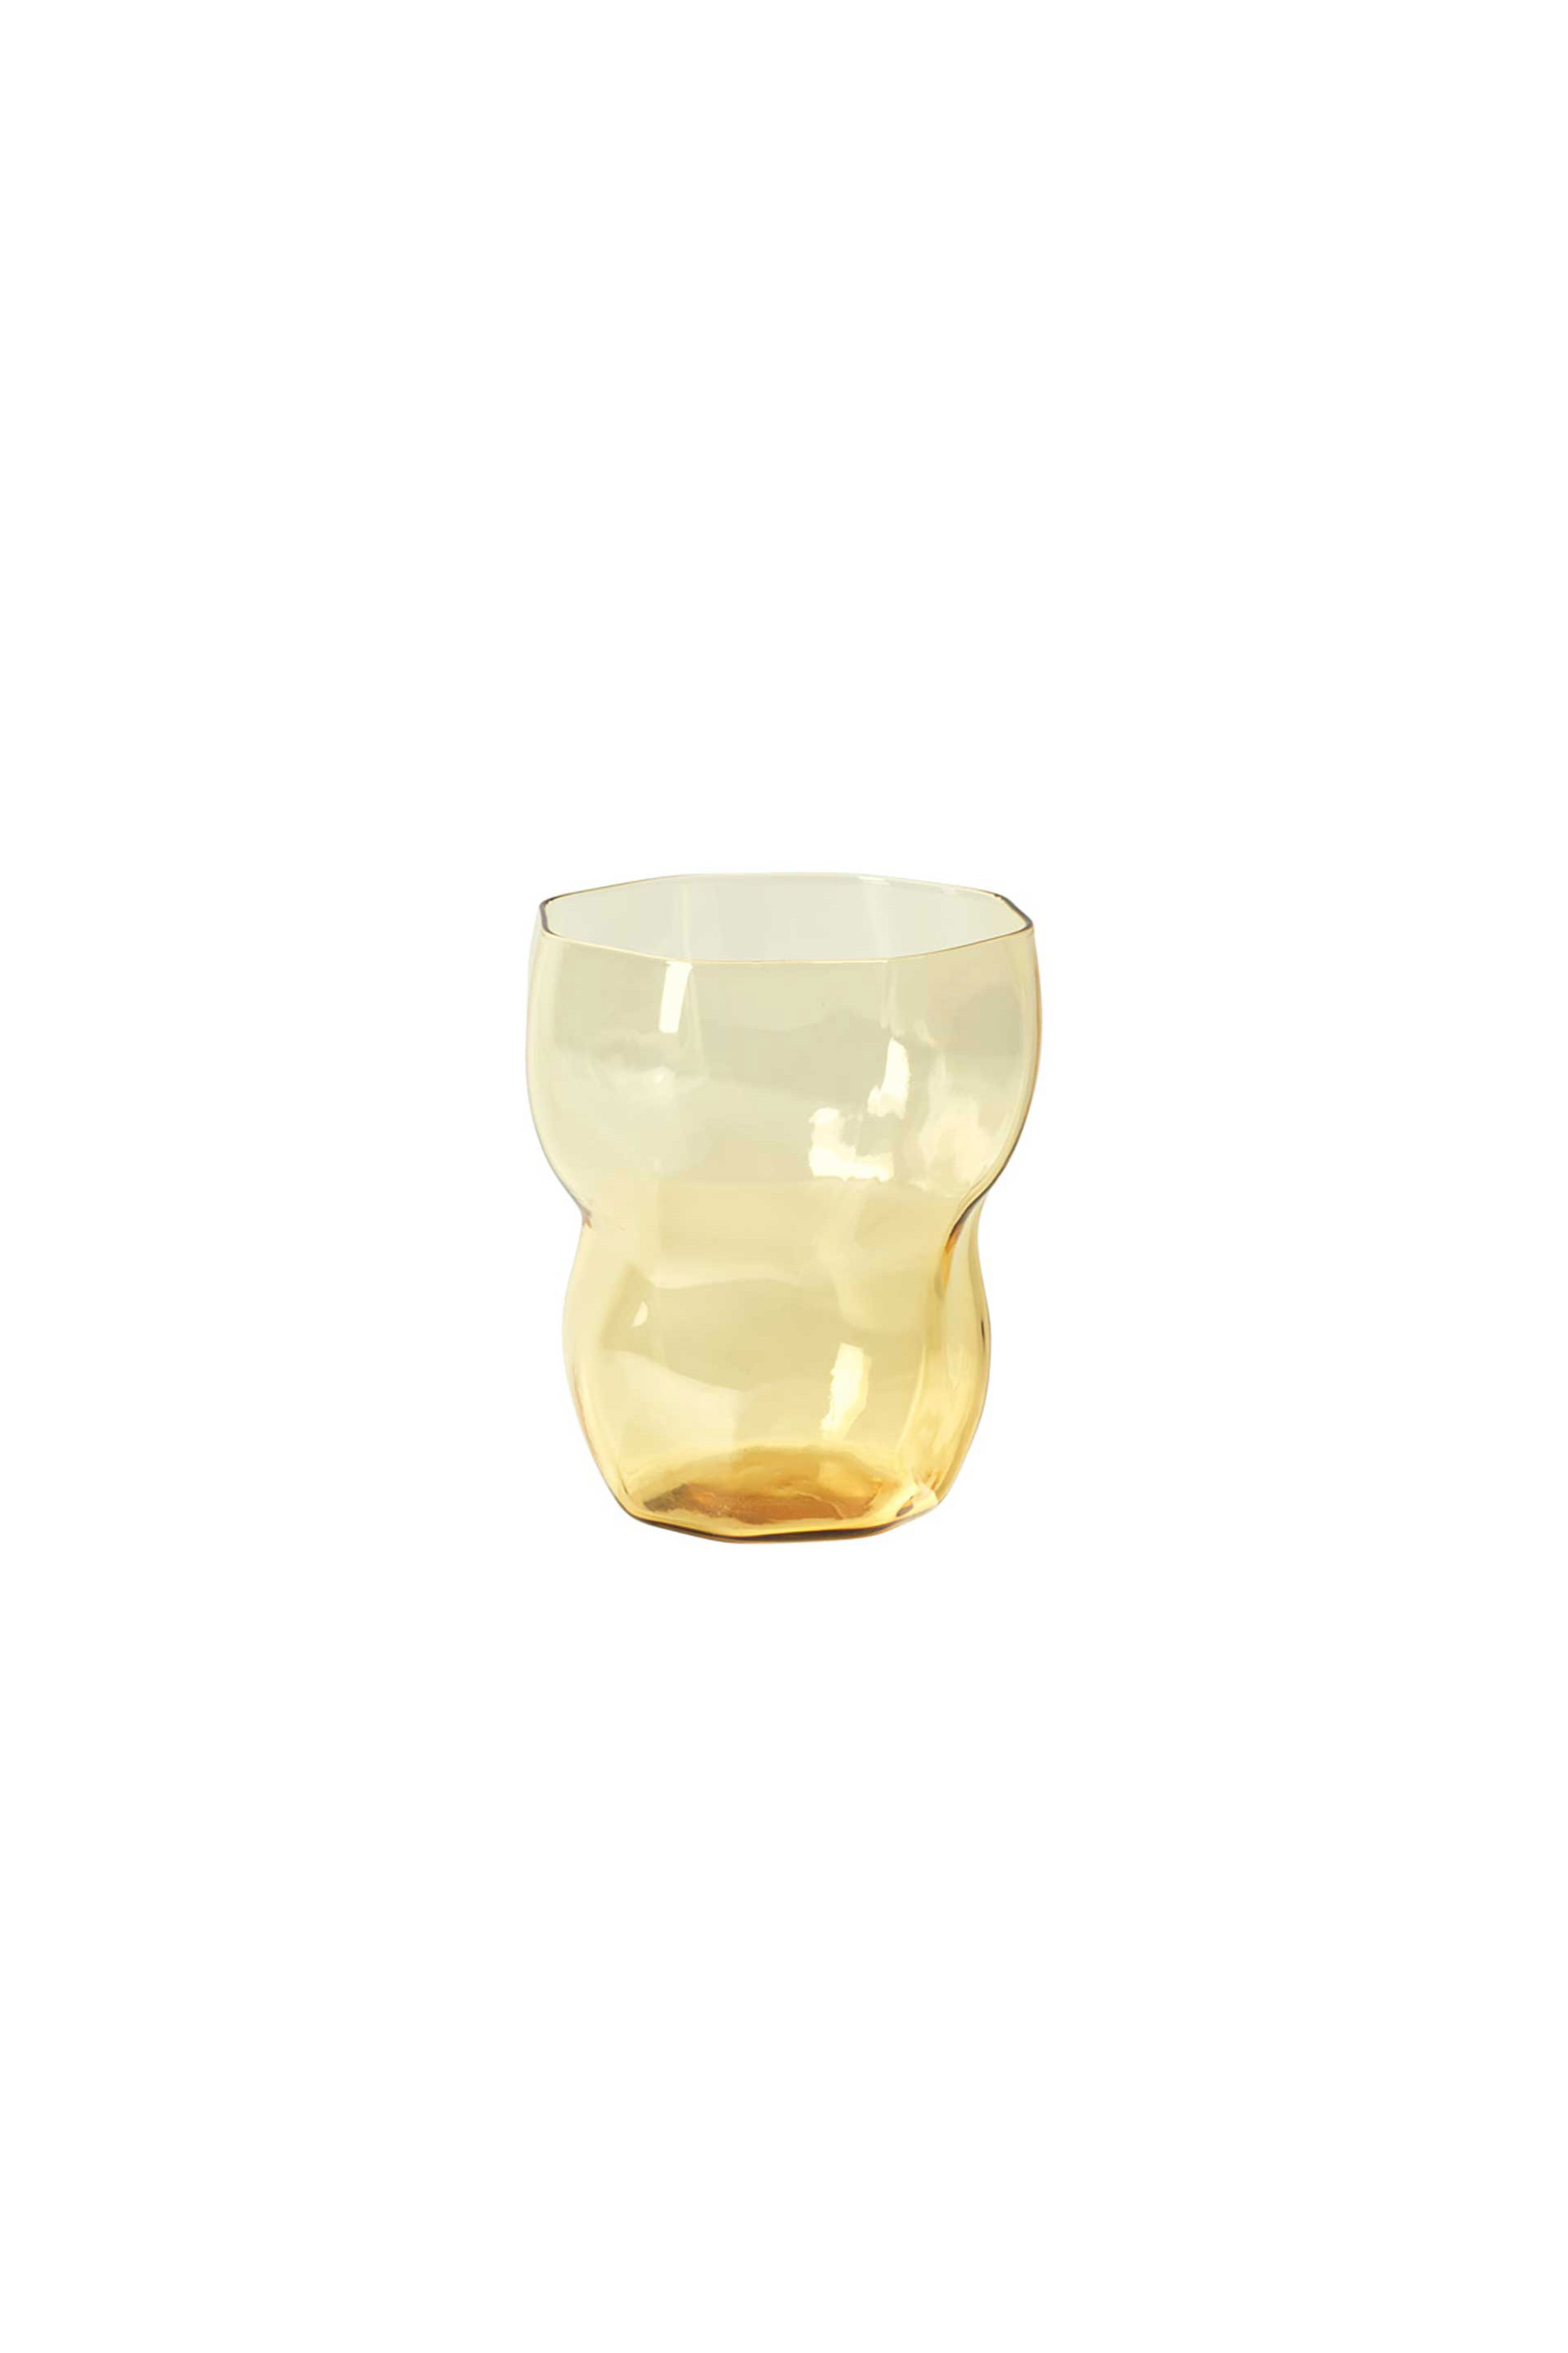 Home > ΚΟΥΖΙΝΑ > Υαλικά > Ποτήρια Broste Copenhagen γυάλινο ποτήρι νερού μονόχρωμο "Limfjord" 9 x 10,7 cm - 14496228 Κίτρινο